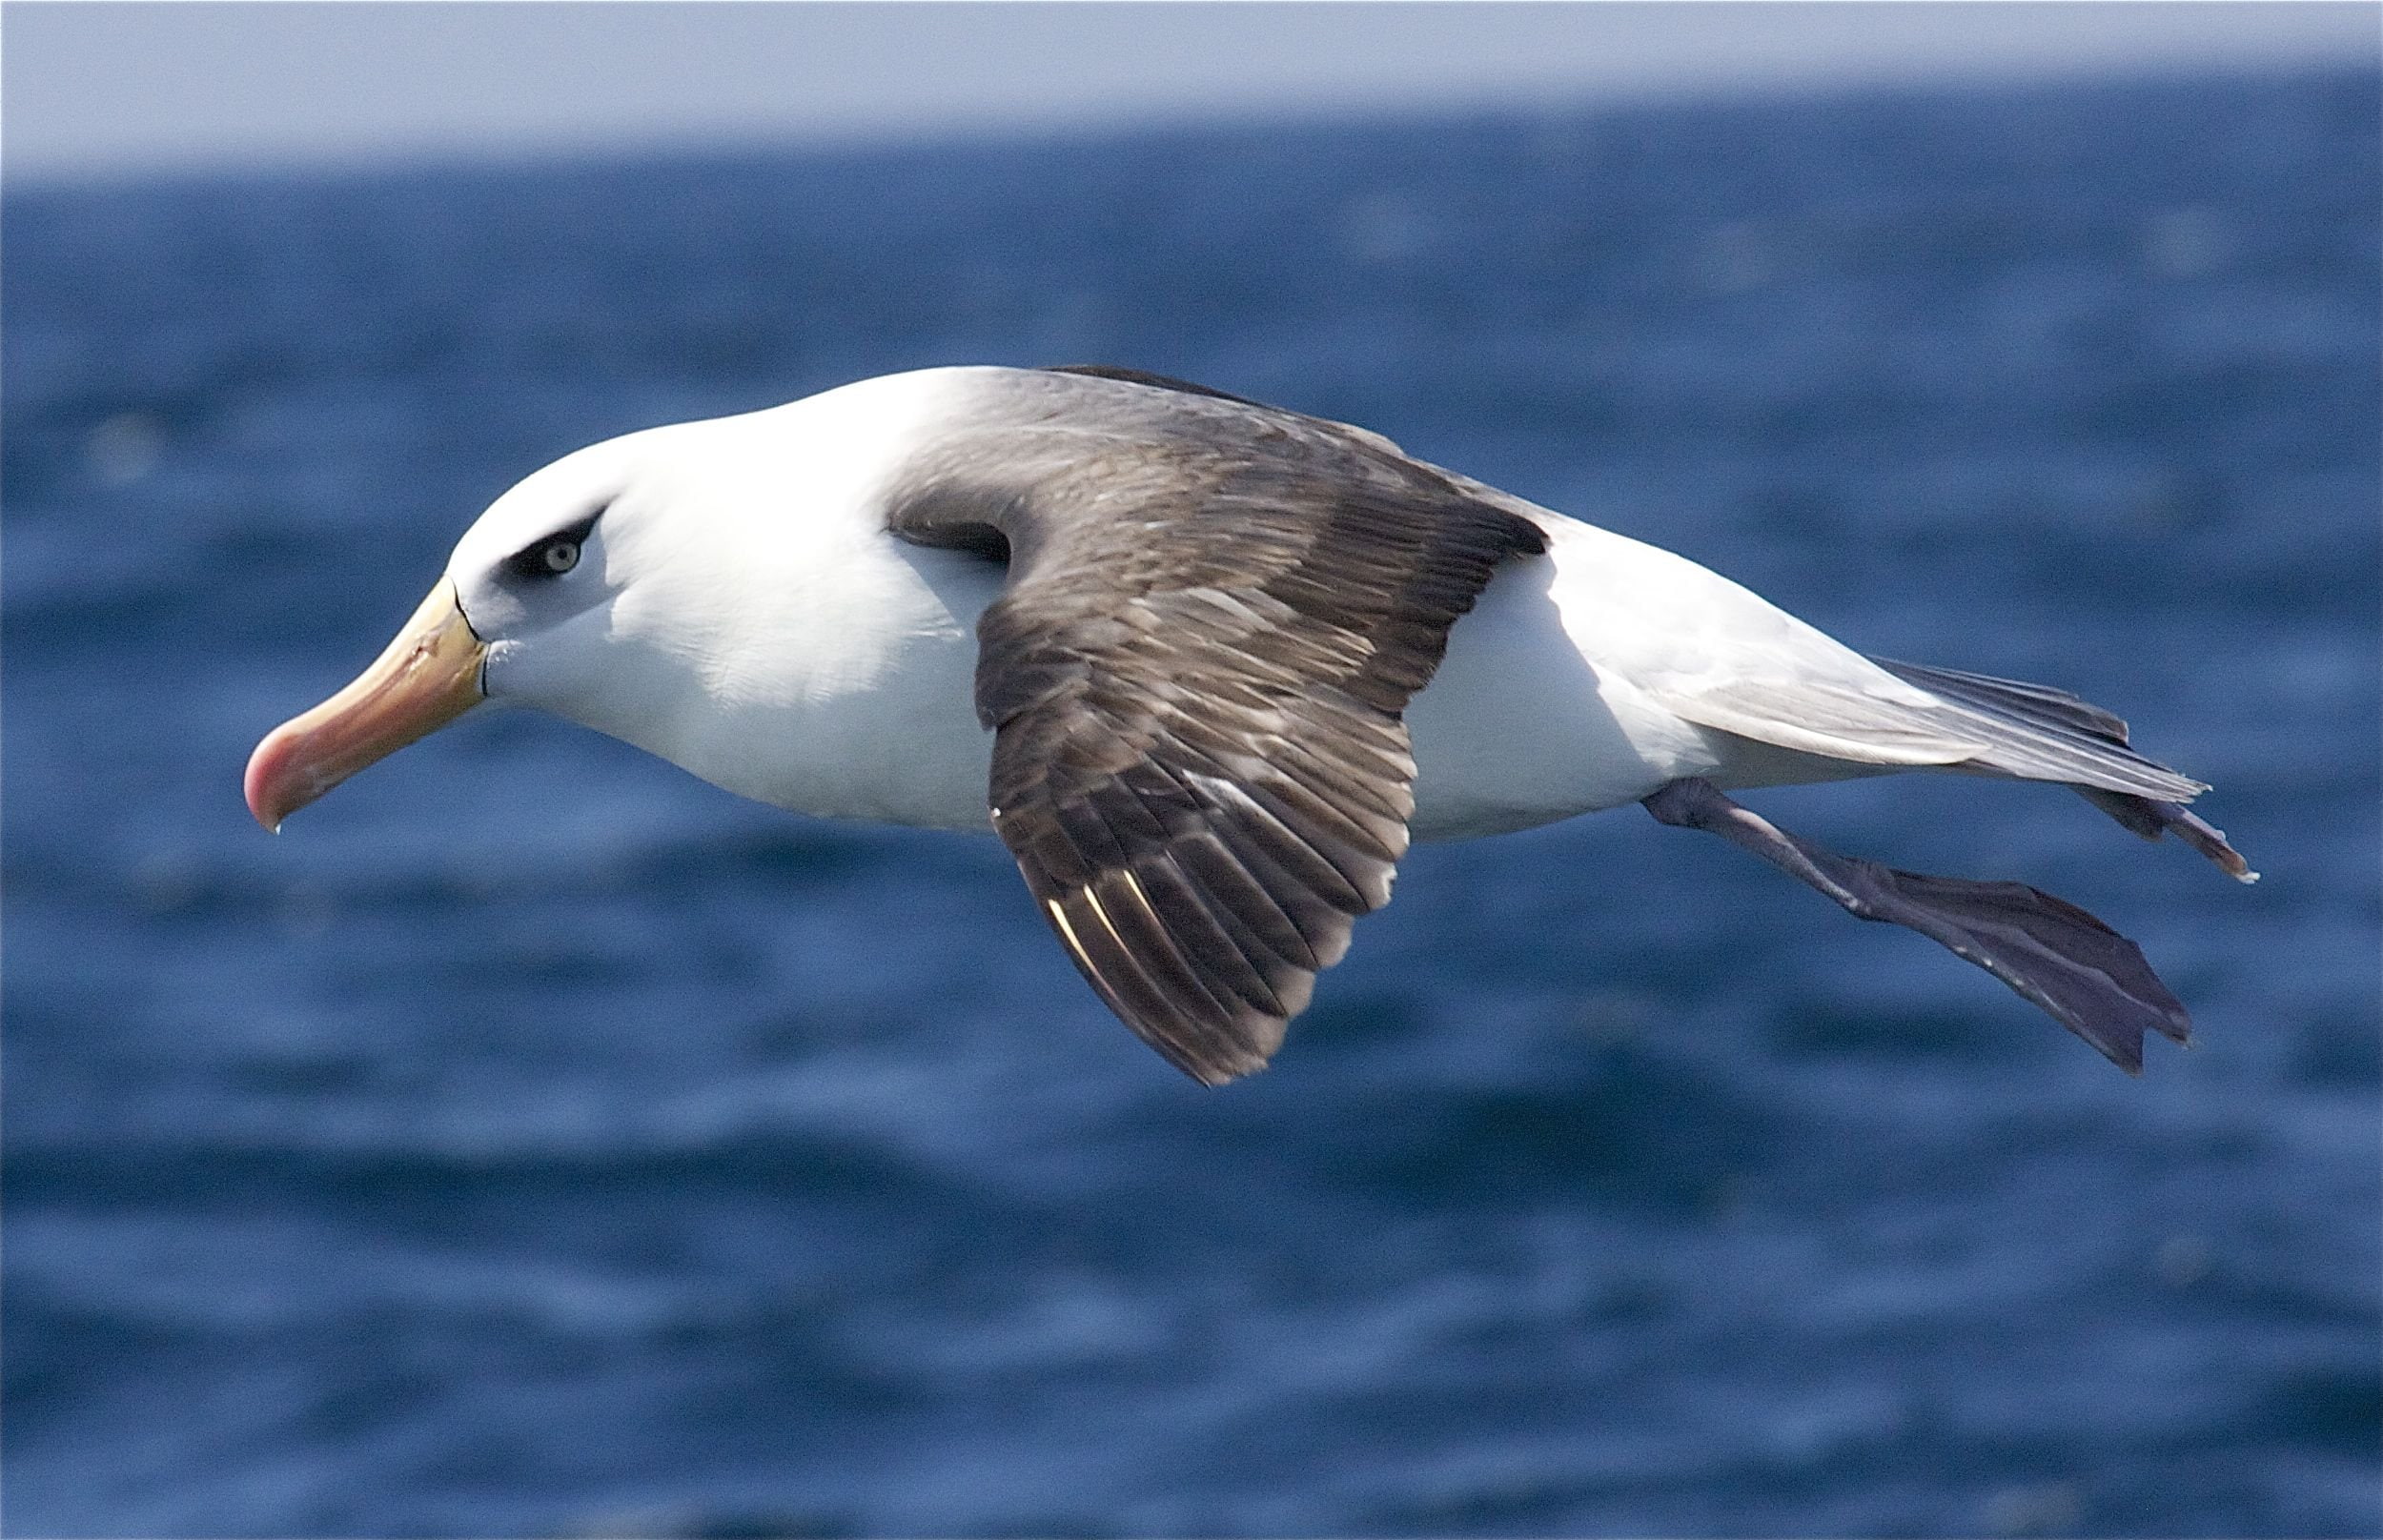 Albatross, bird, birds, Seabird, animal wildlife, animals in the wild